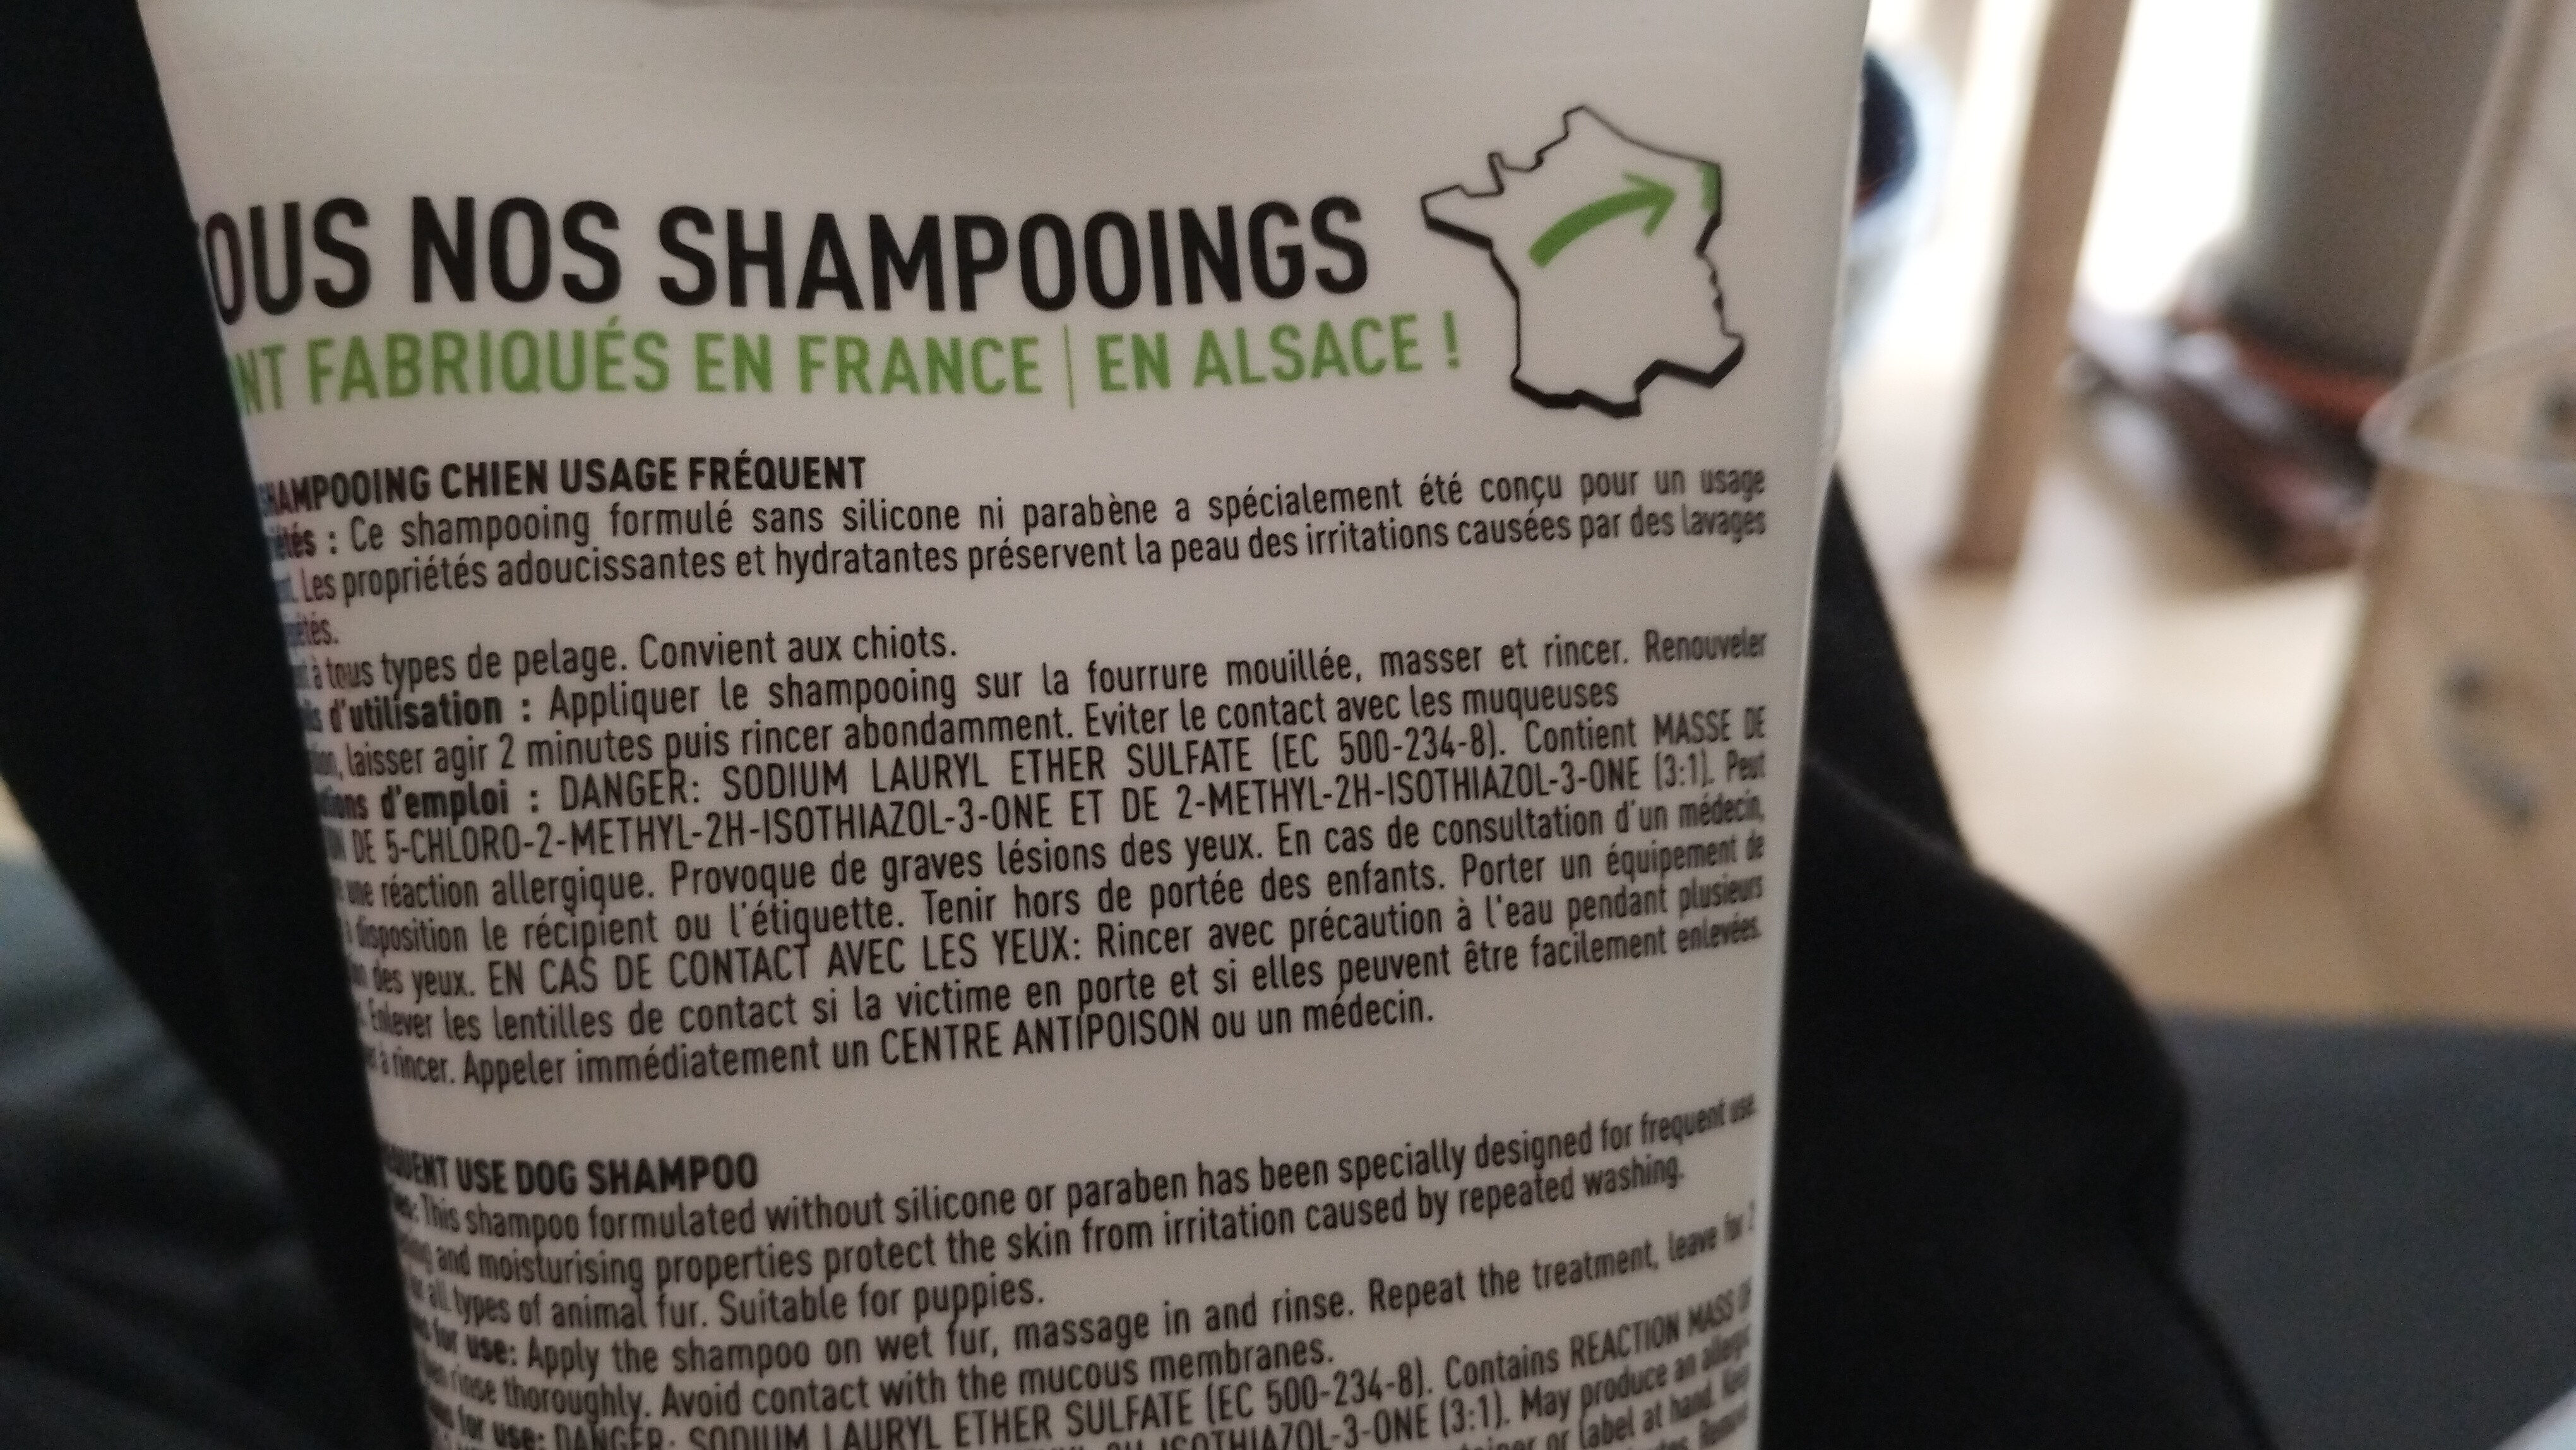 shampooing chien - Ingredients - fr